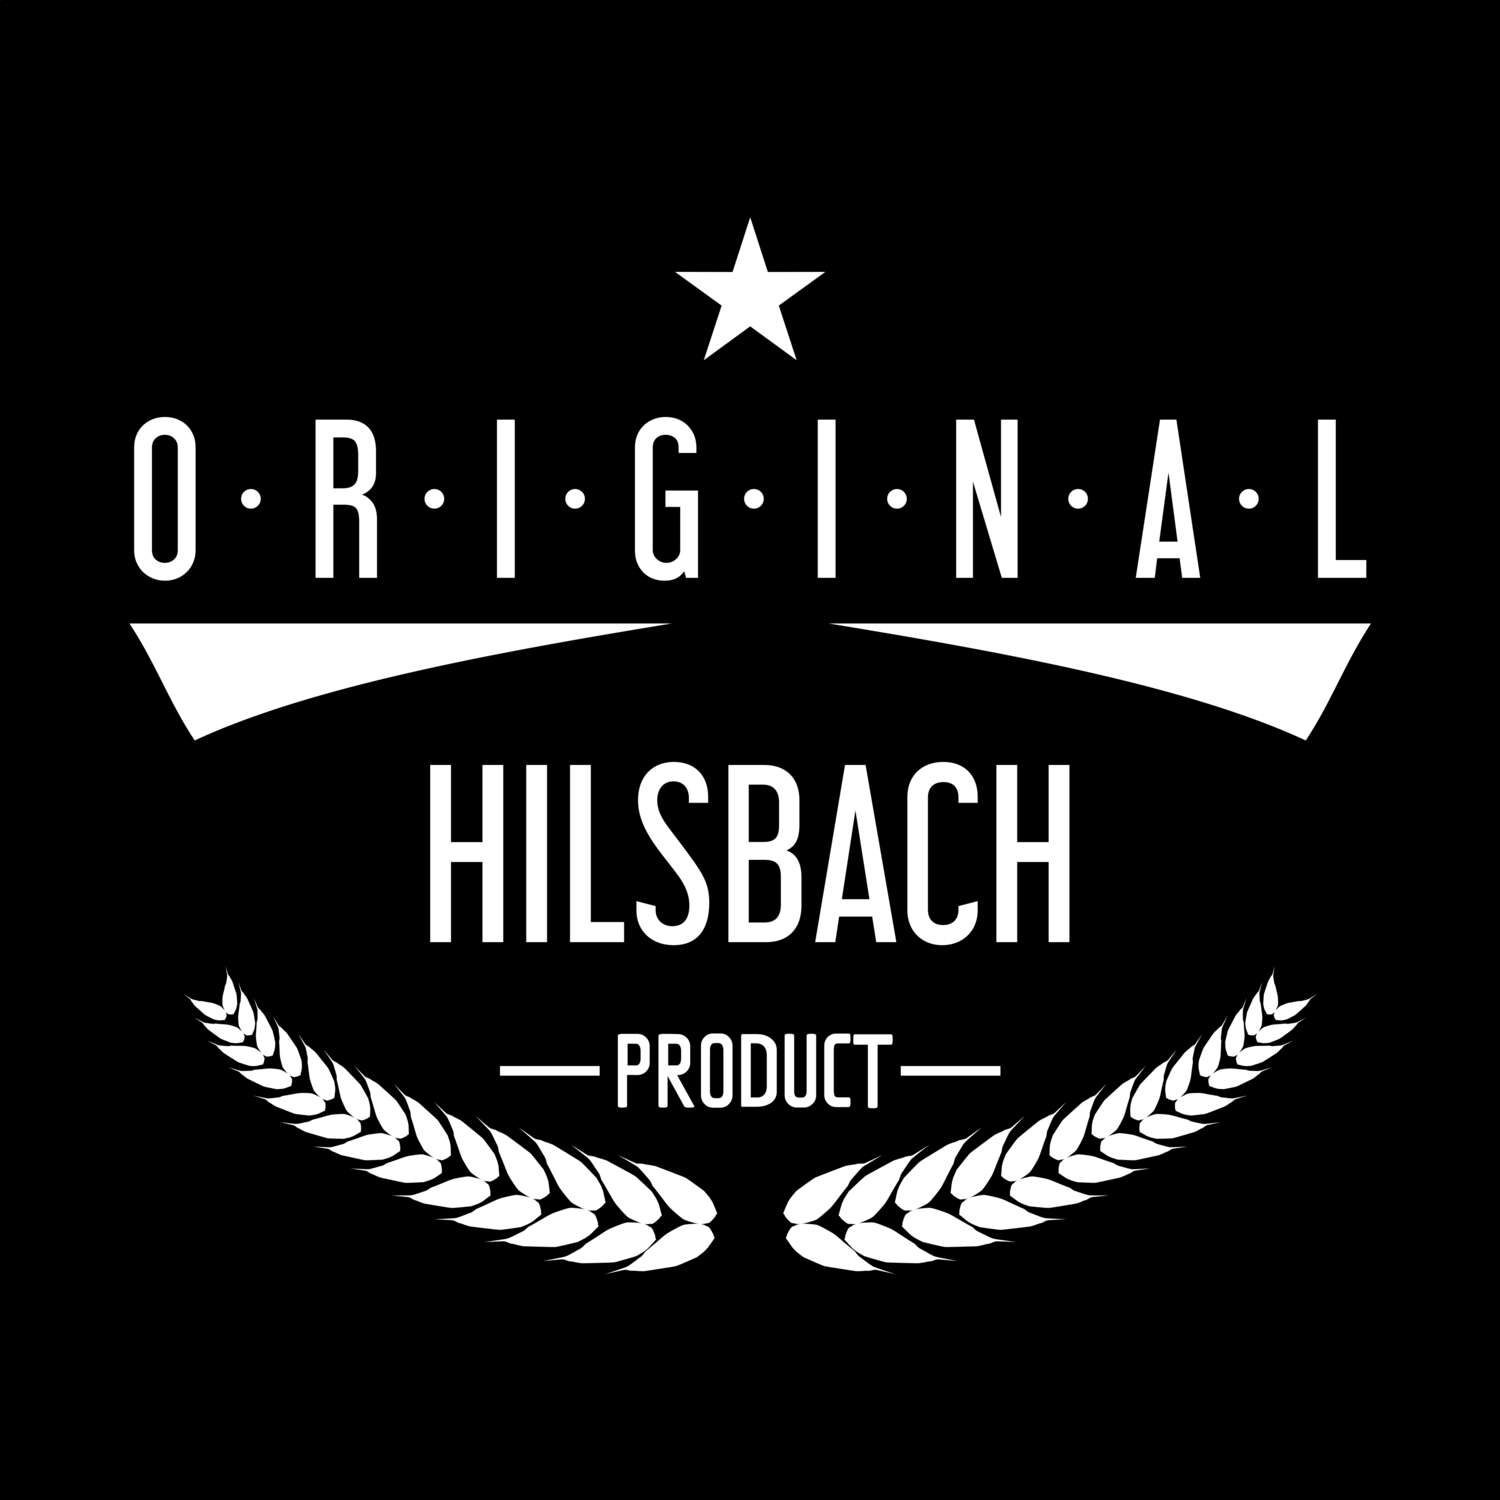 Hilsbach T-Shirt »Original Product«